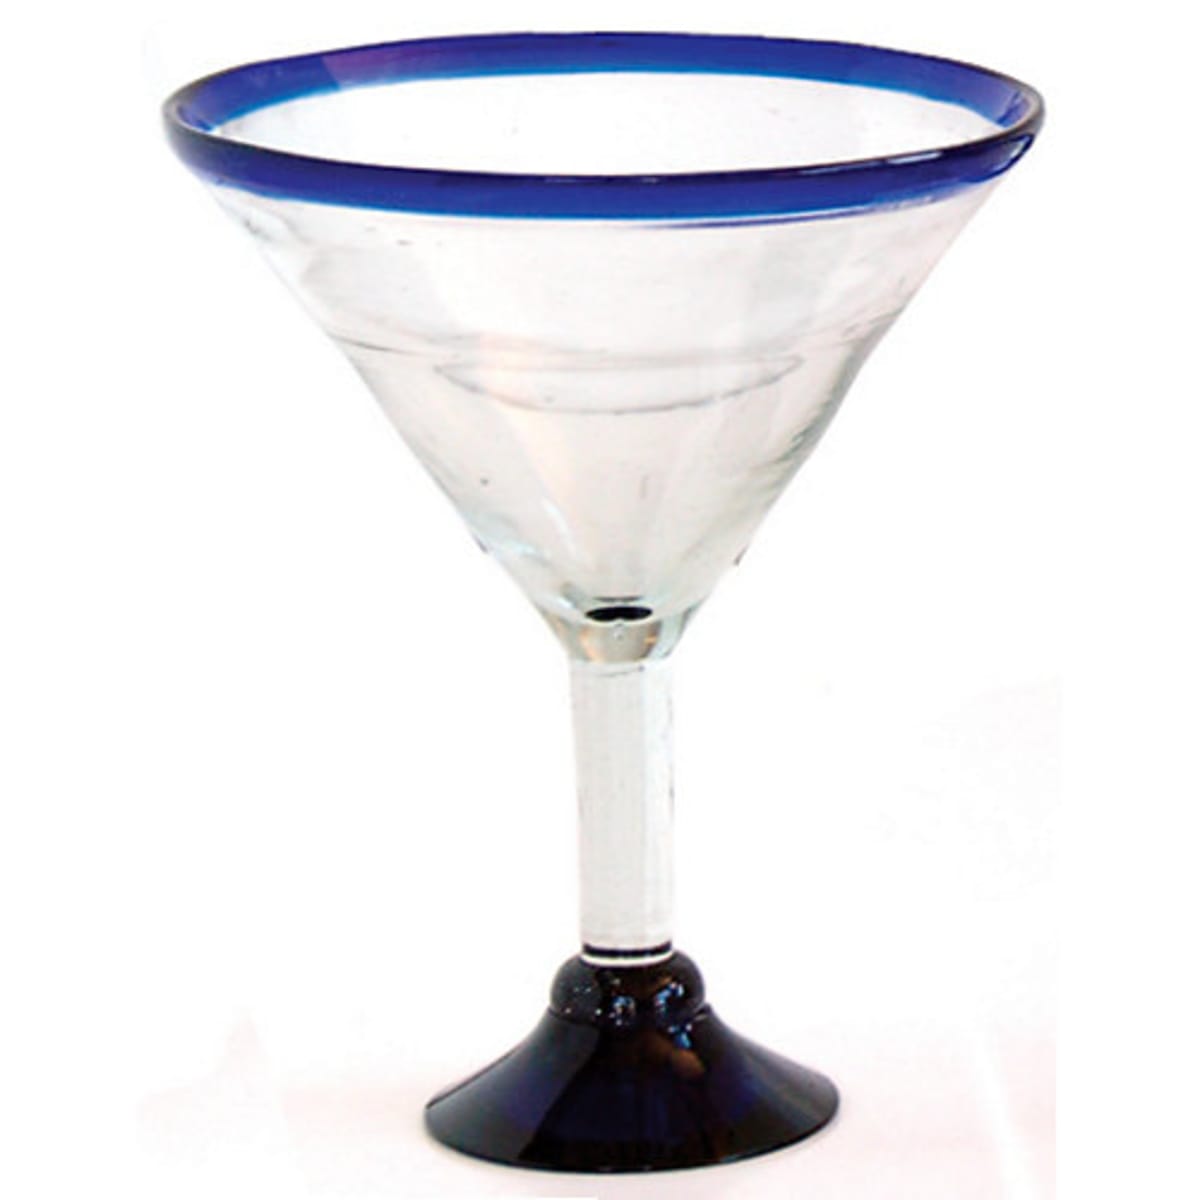 CoronaRita Bottle Holders & Grande Martini Glass